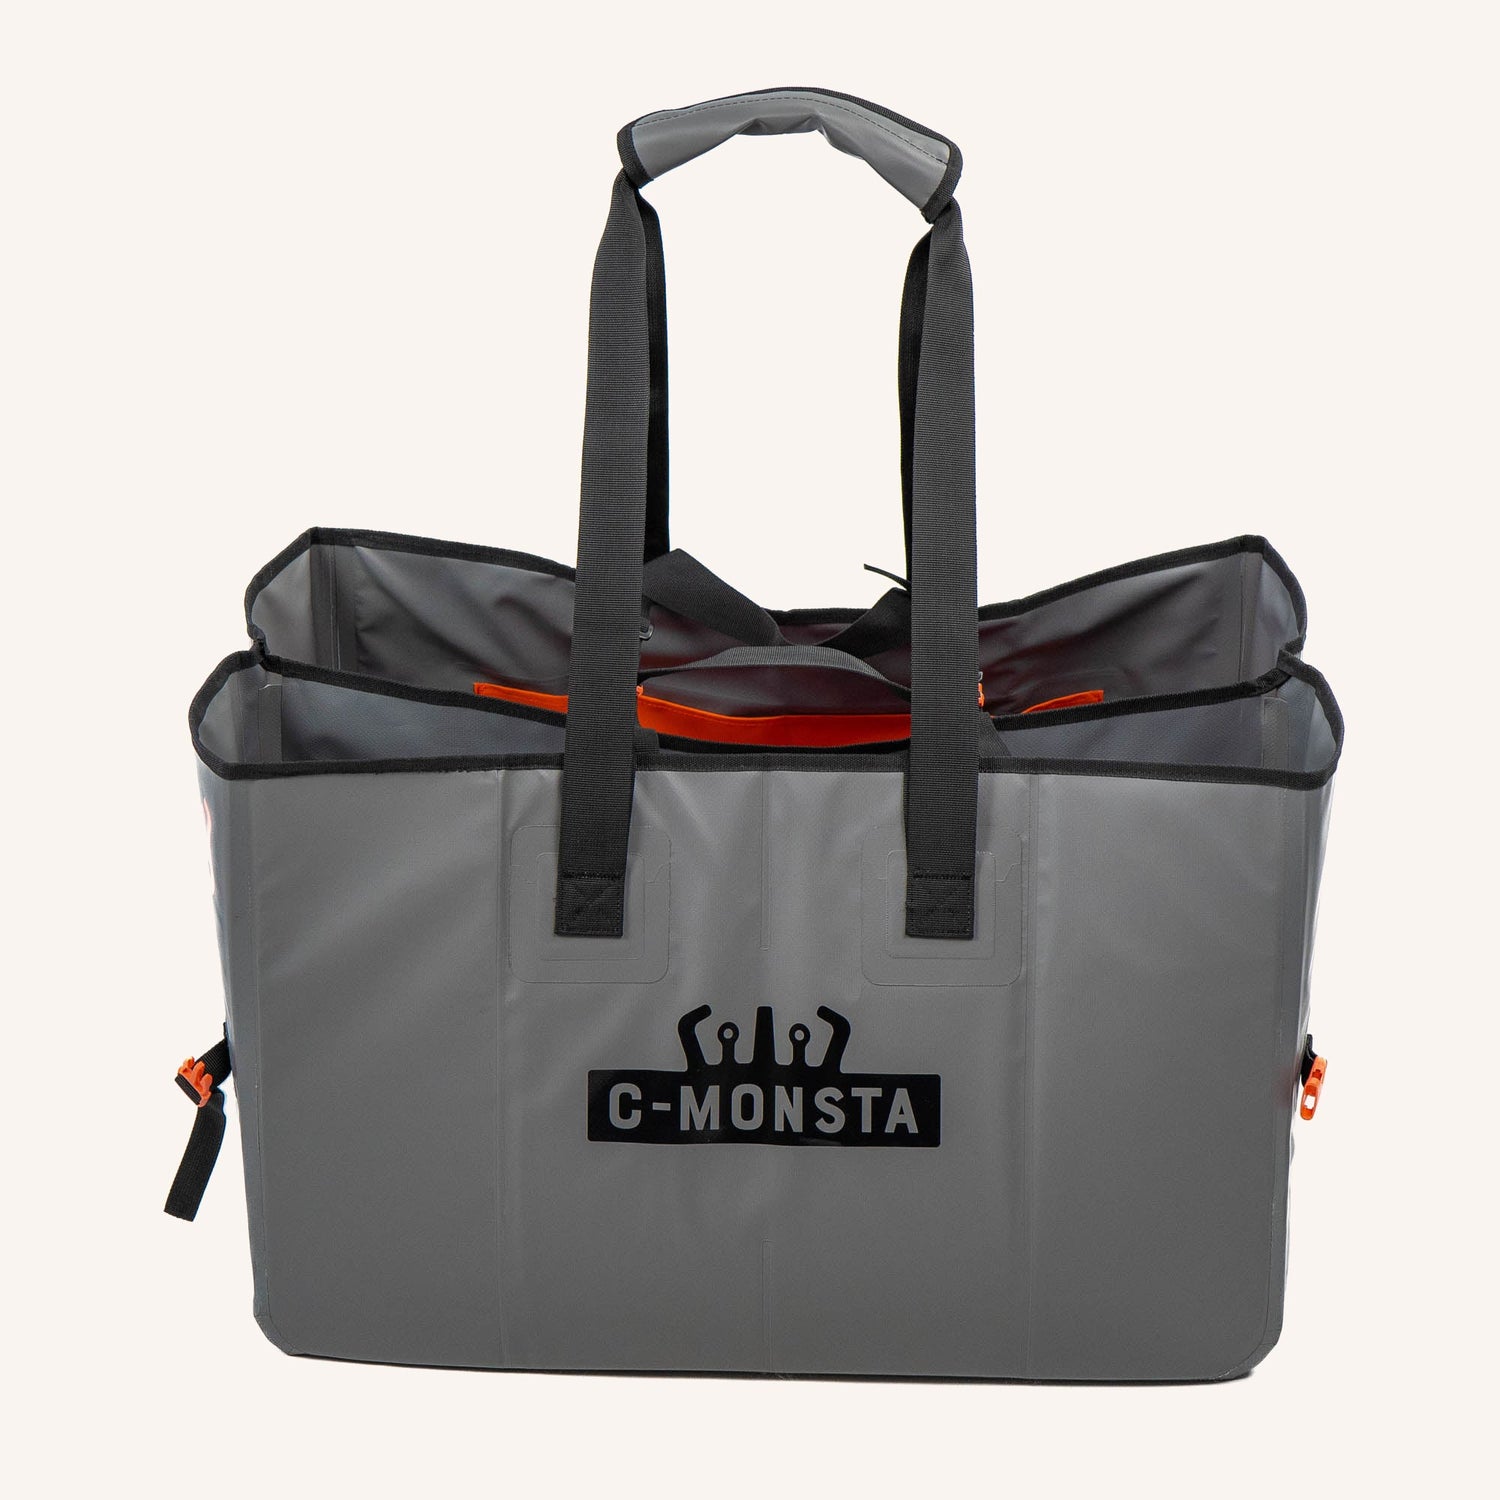 C-Monsta Split Bag - Wet/Dry Wetsuit Storage Bag - Seaside Surf Shop 